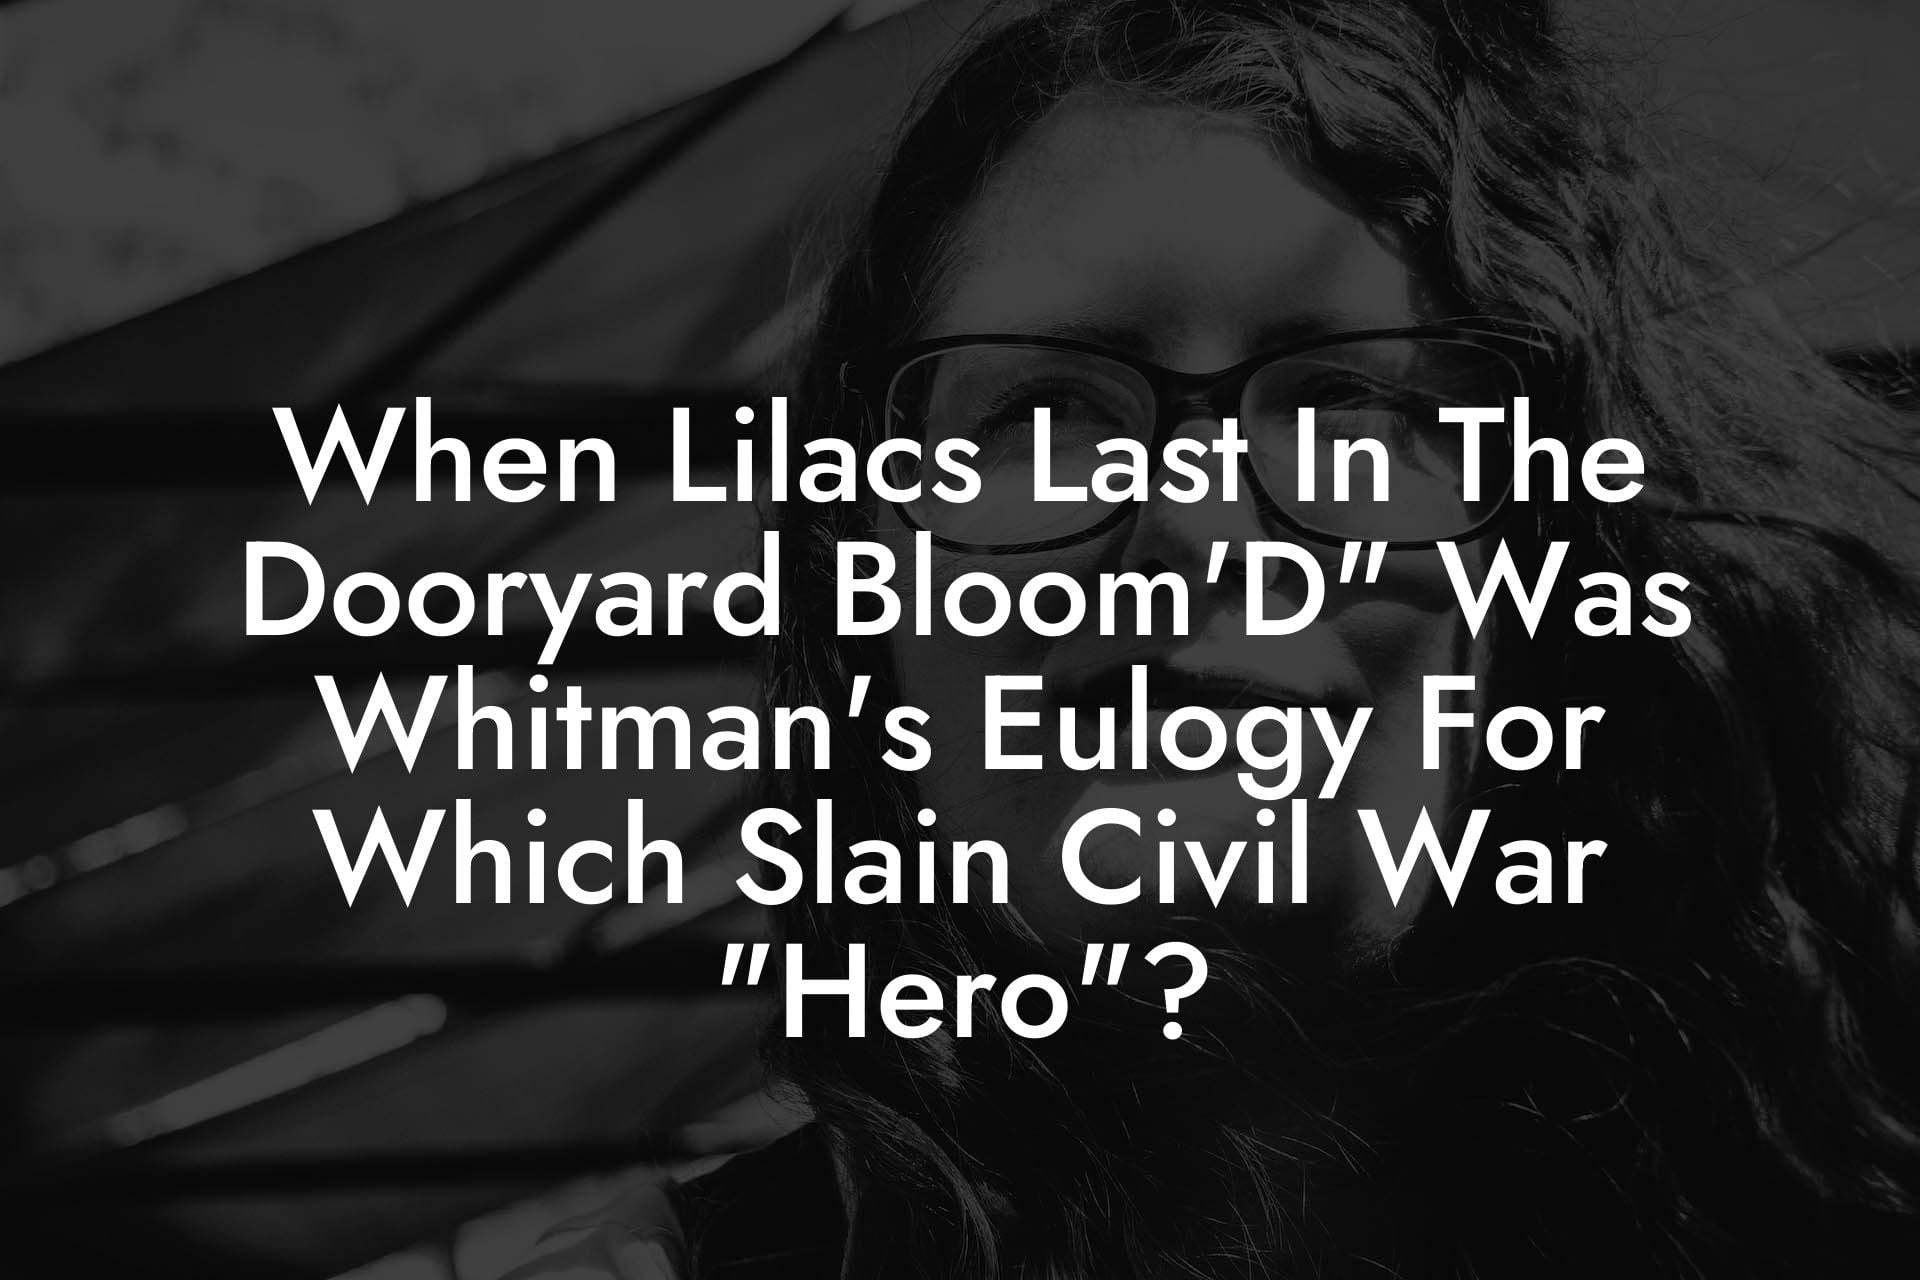 When Lilacs Last In The Dooryard Bloom'D" Was Whitman's Eulogy For Which Slain Civil War "Hero"?